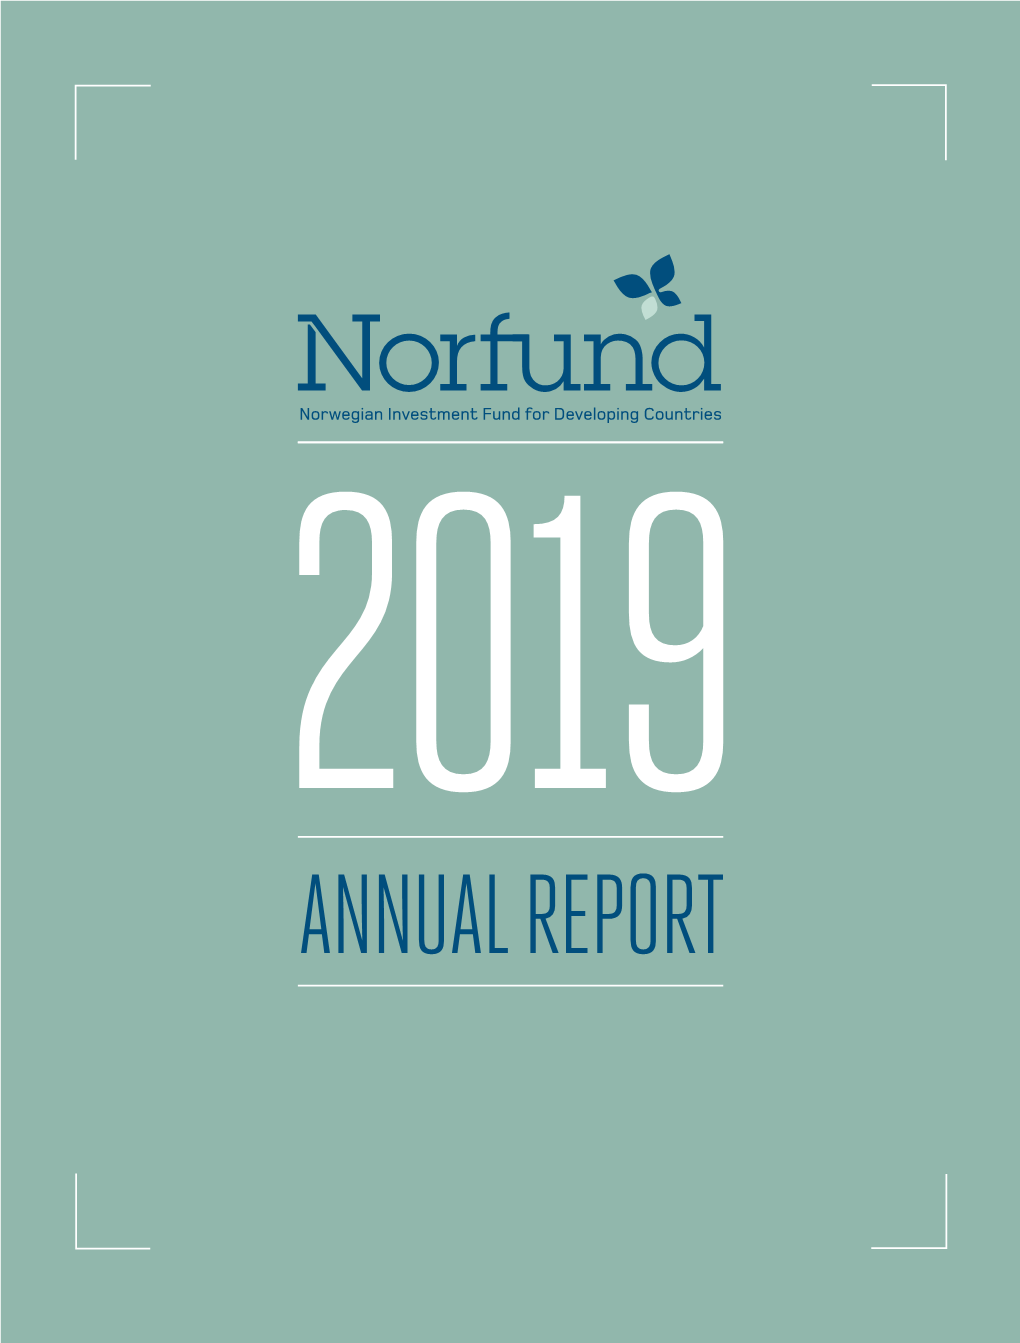 Annual Report Directors’ Report